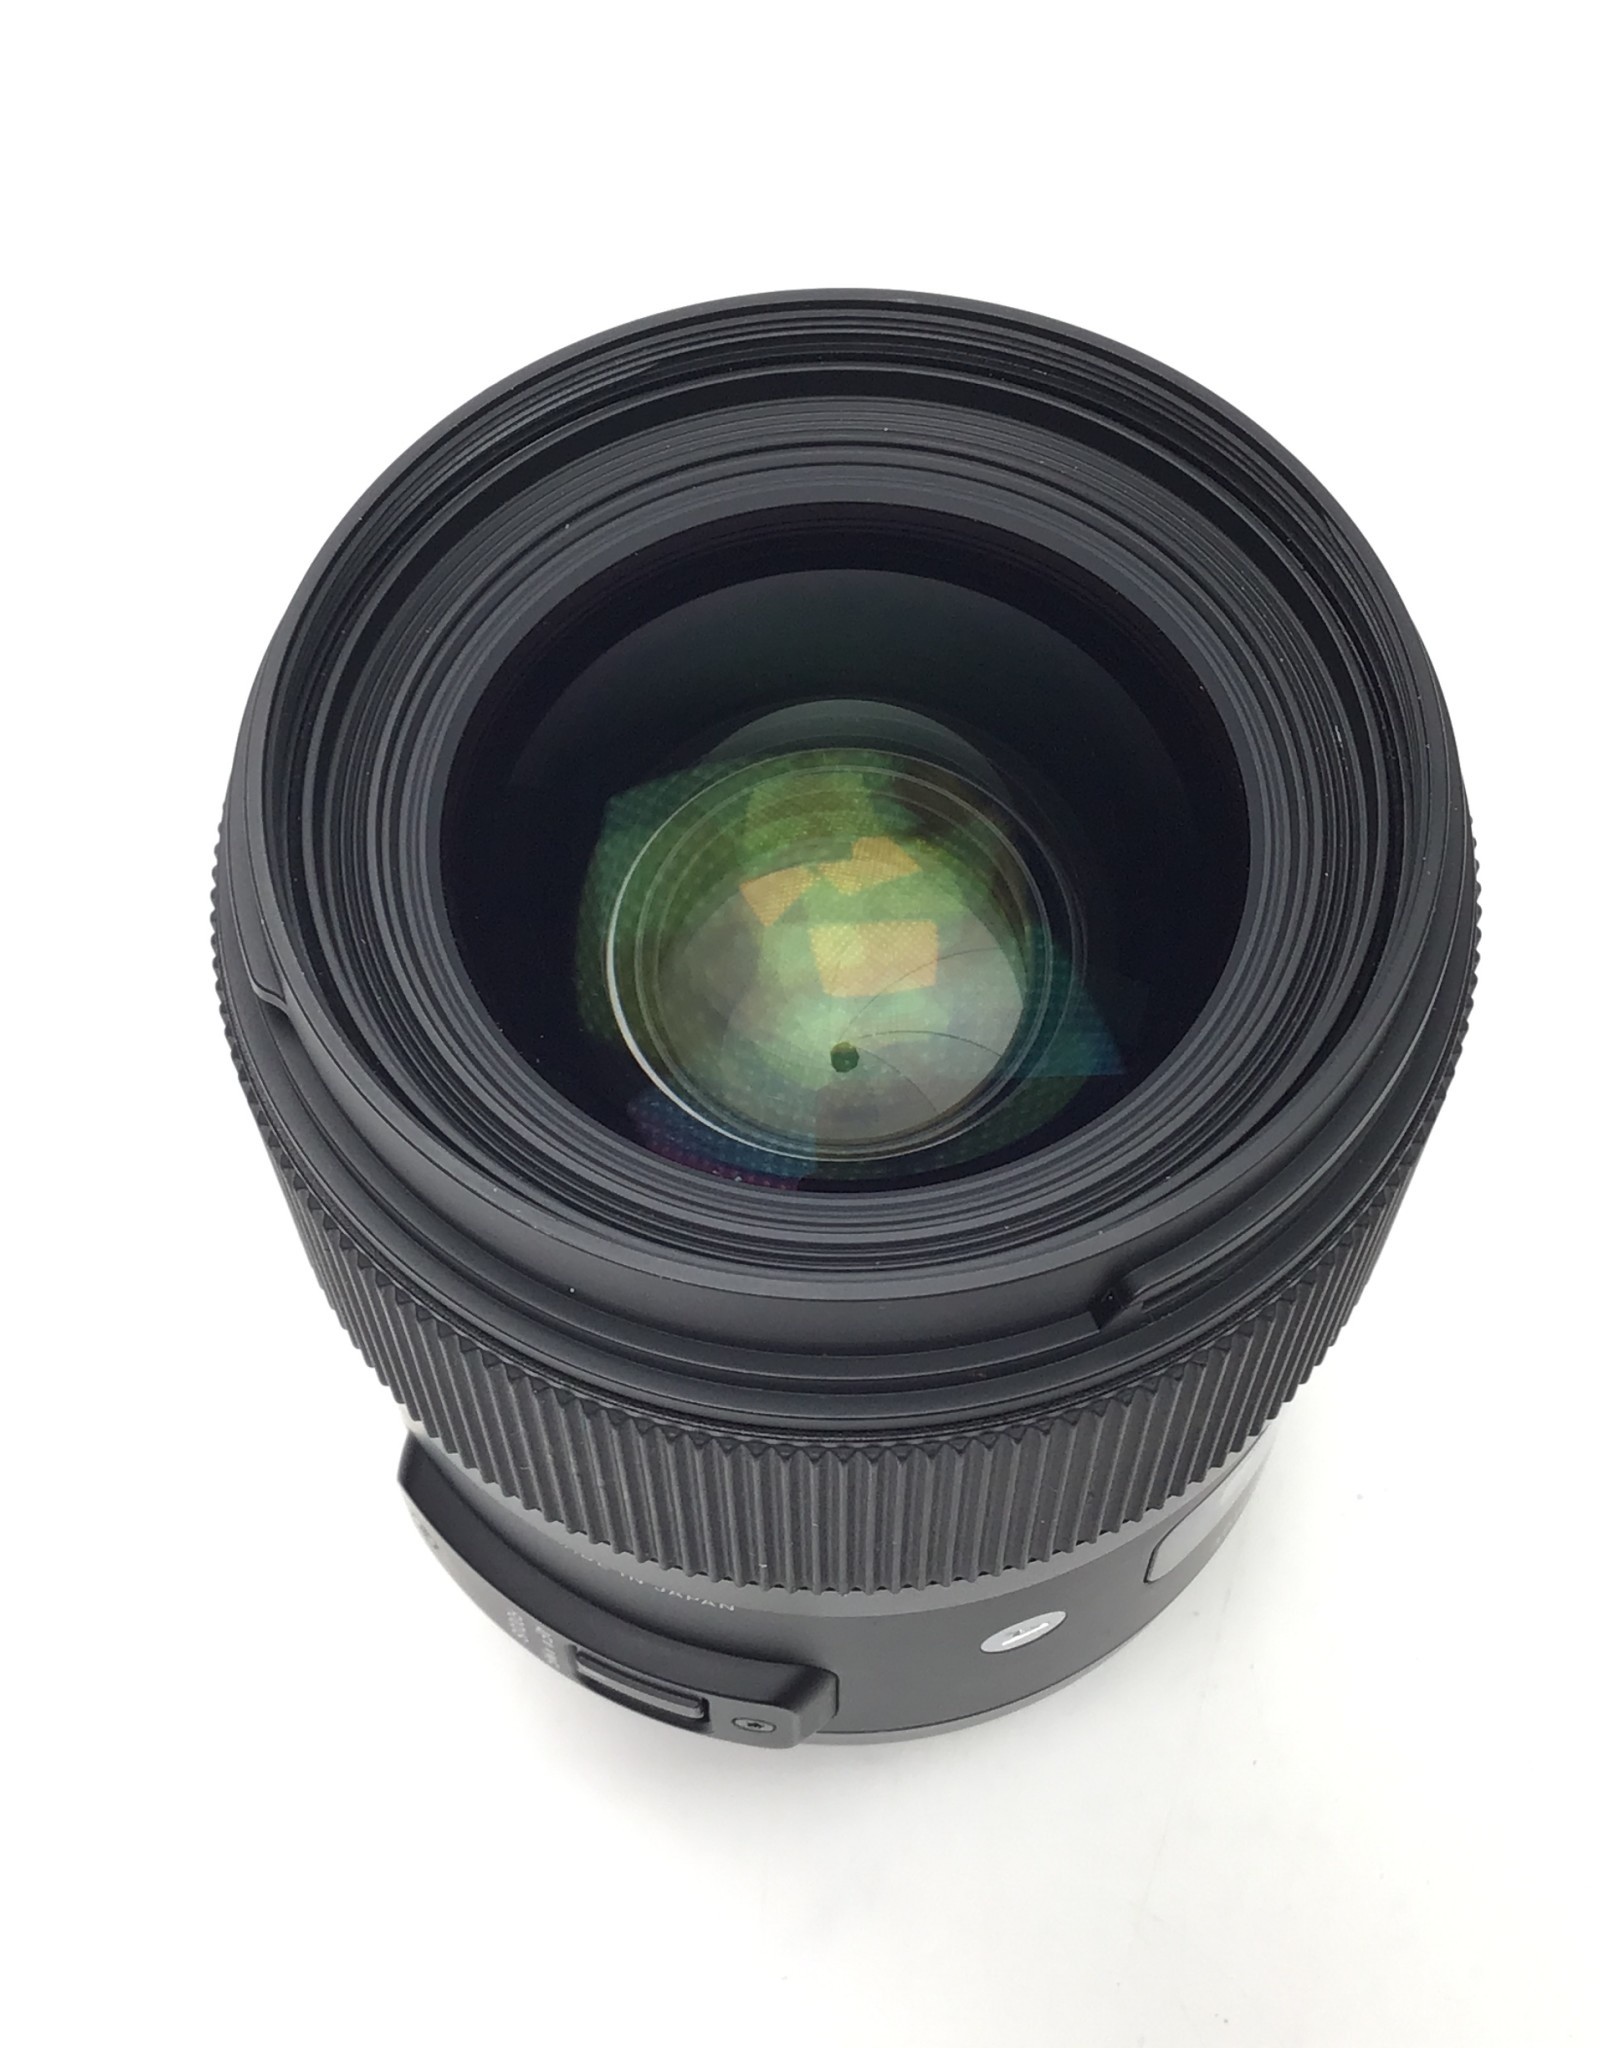 SIGMA Sigma 35mm f1.4 DG Art Lens for Nikon F Used Good